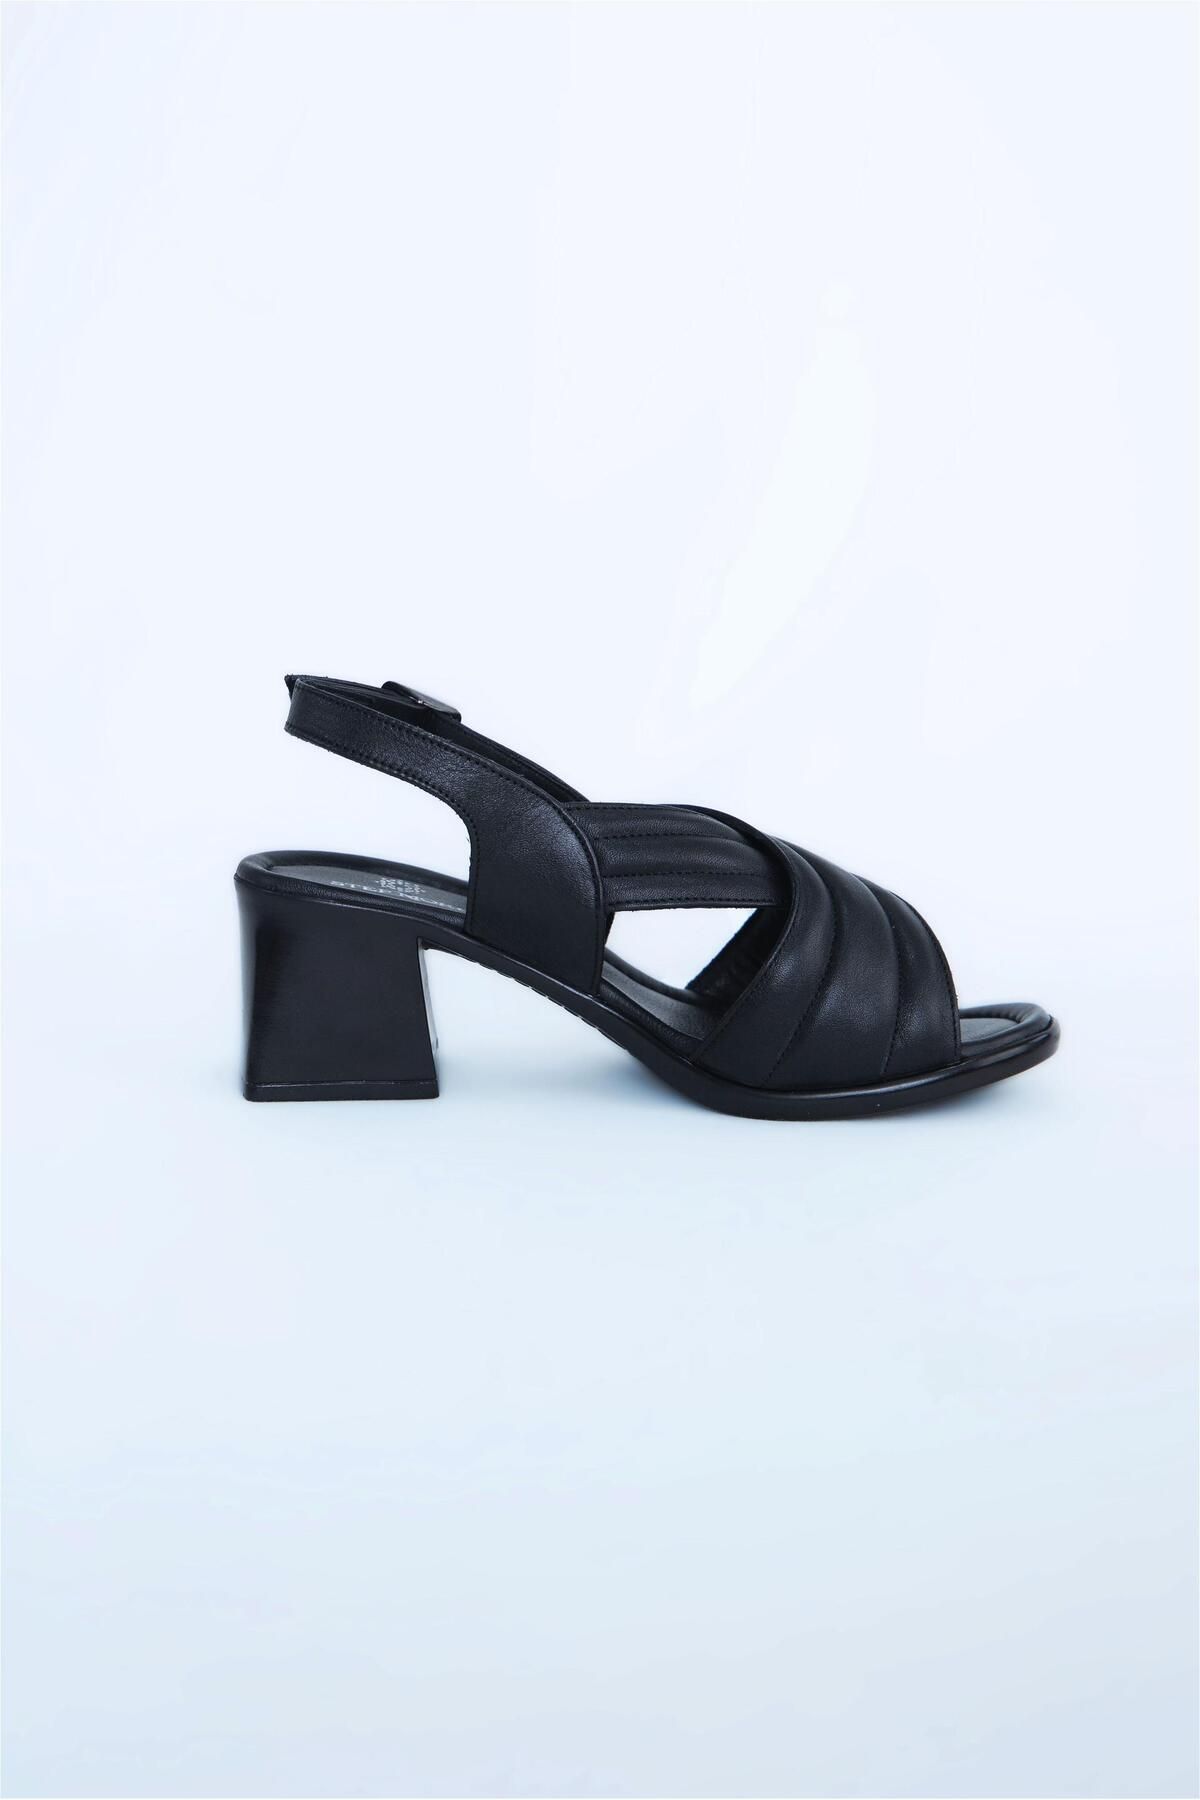 STEP MORE Z6912003 Siyah Kadın Topuklu Sandalet